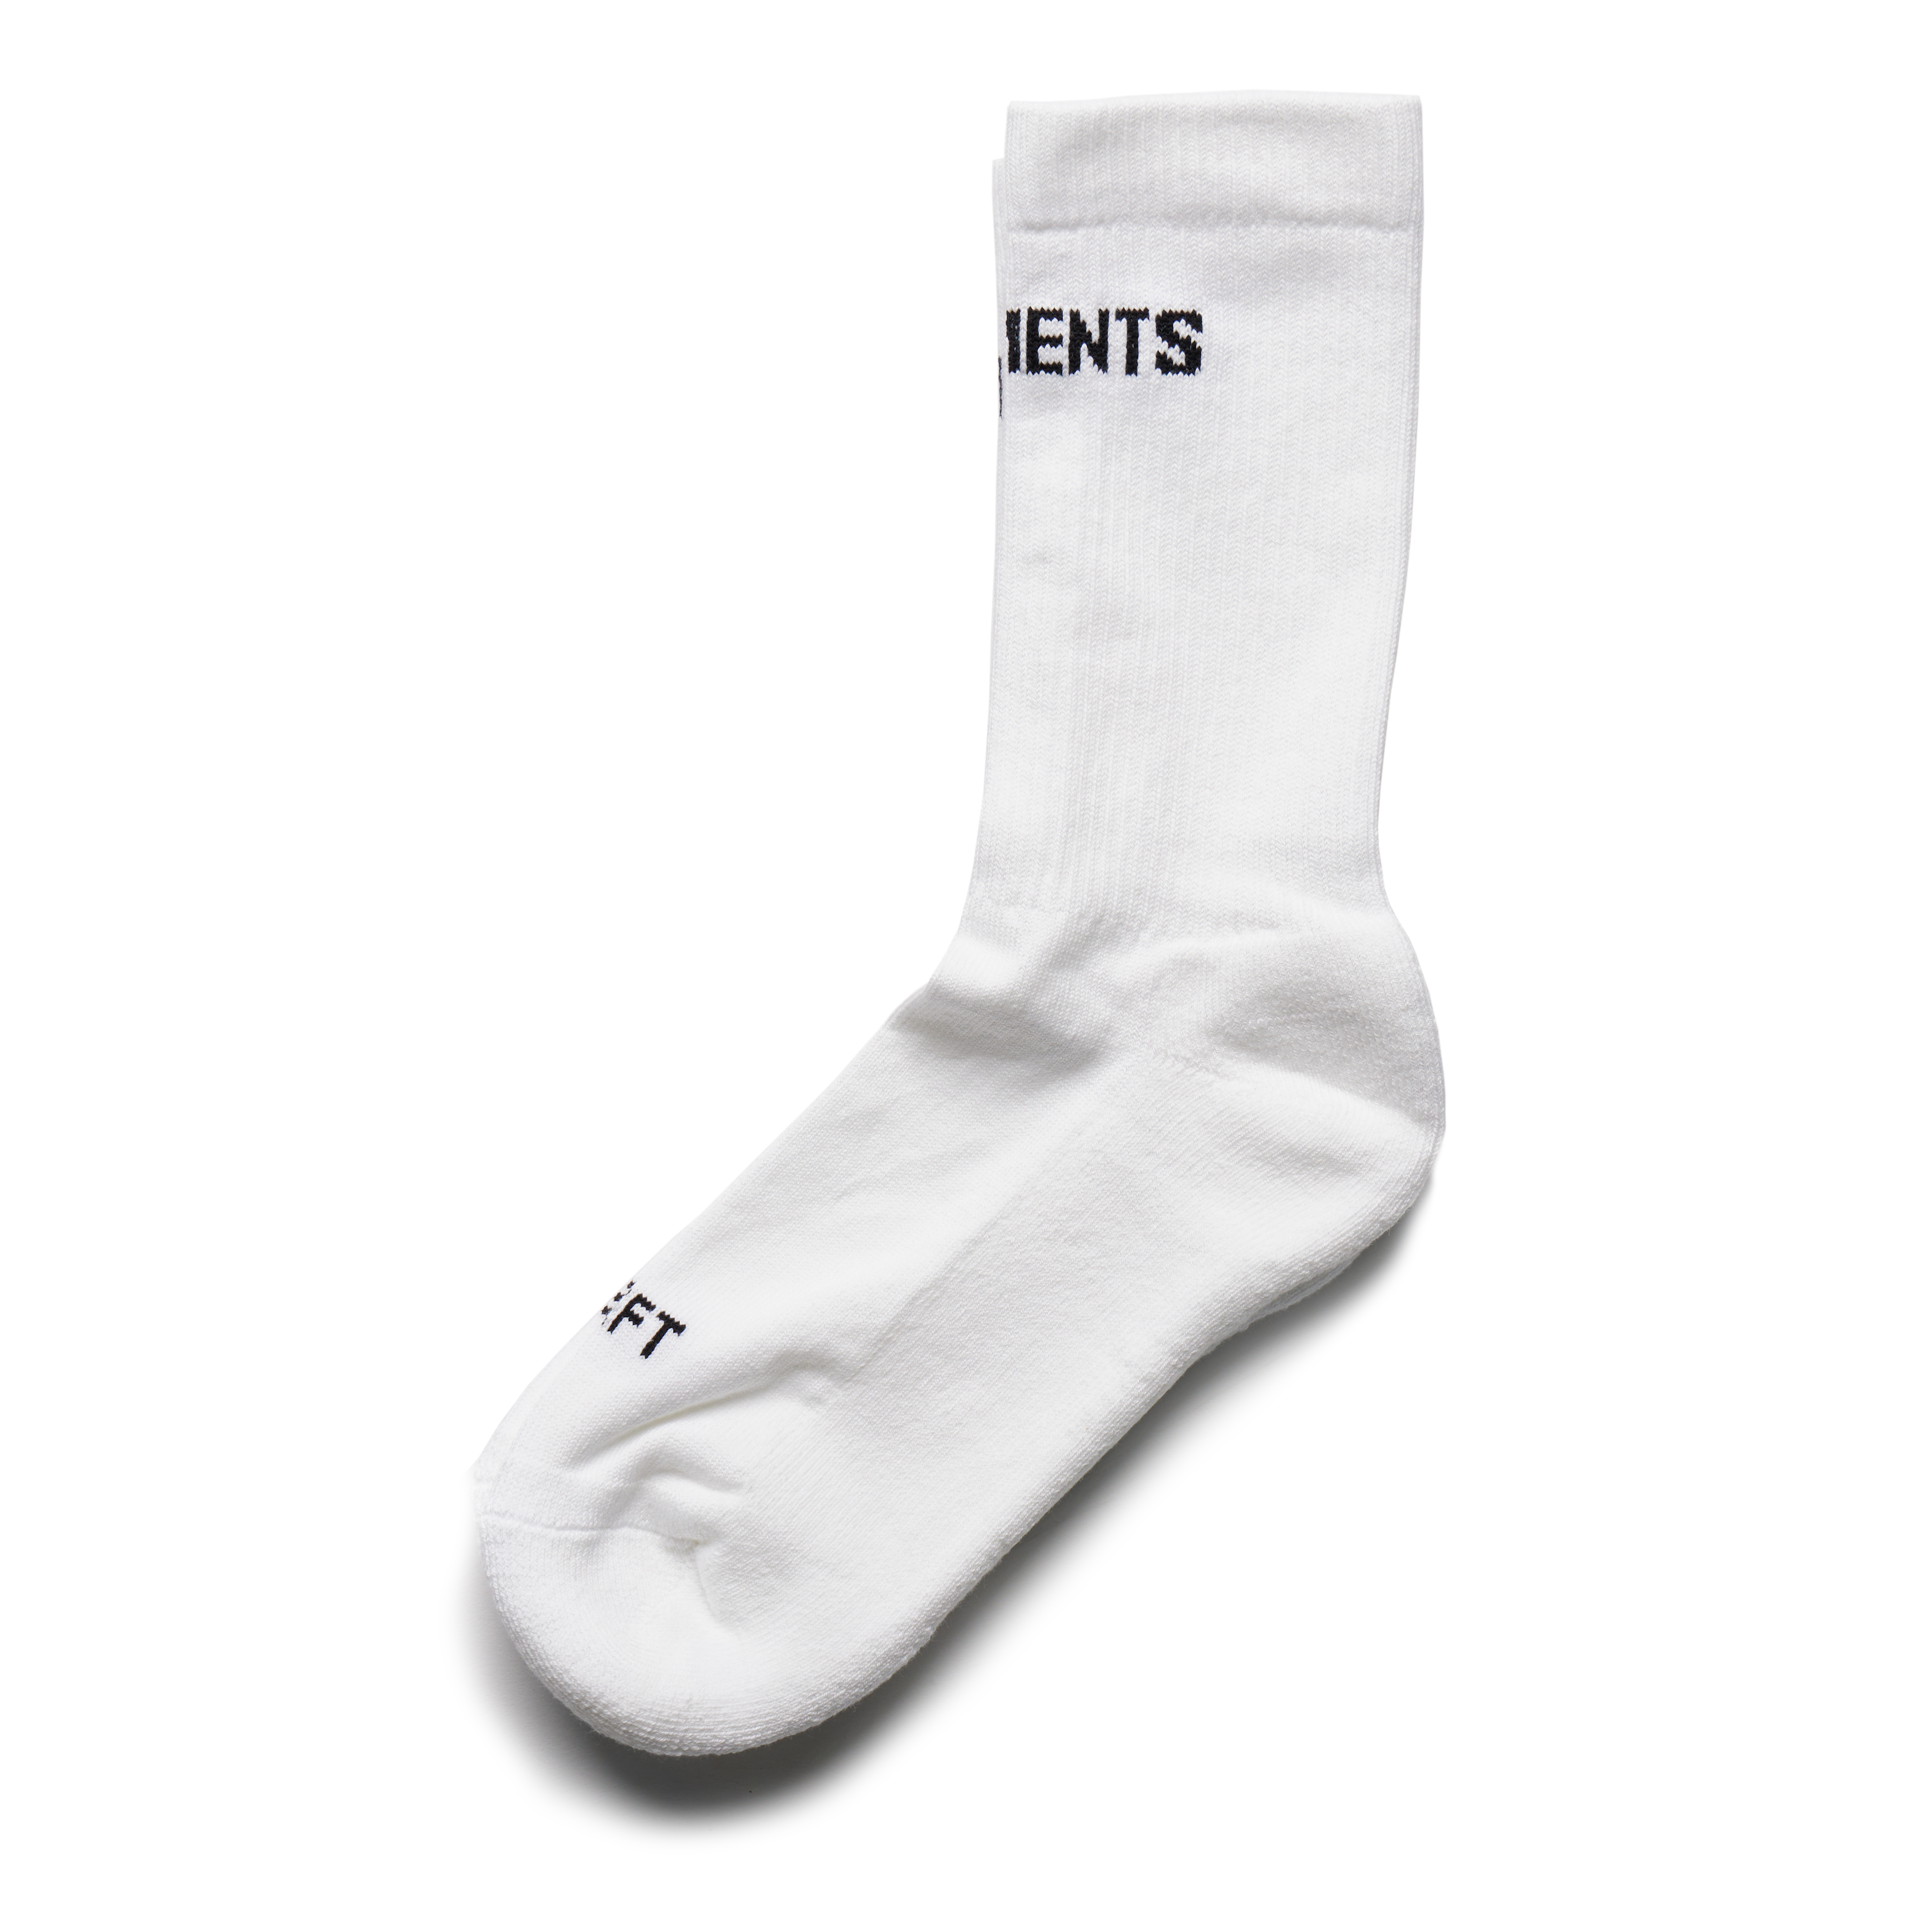 VETEMENTS - Logo Socks product image